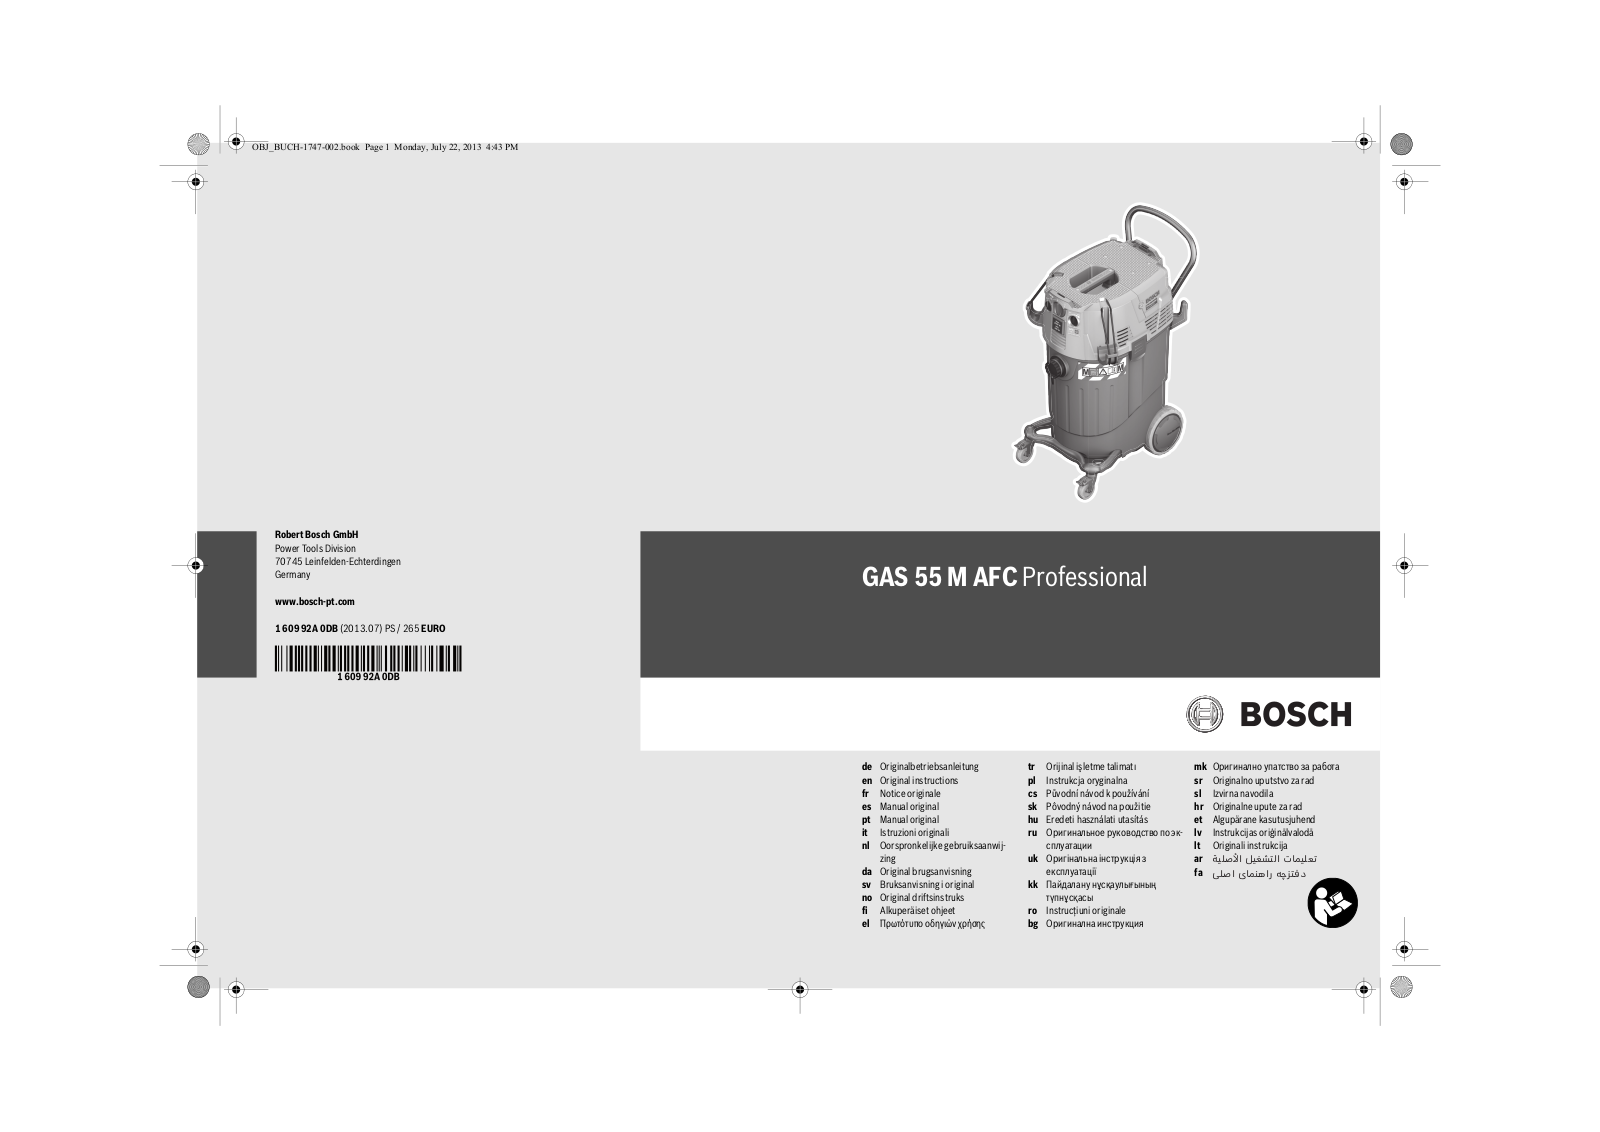 Bosch GAS 55 M AFC User Manual